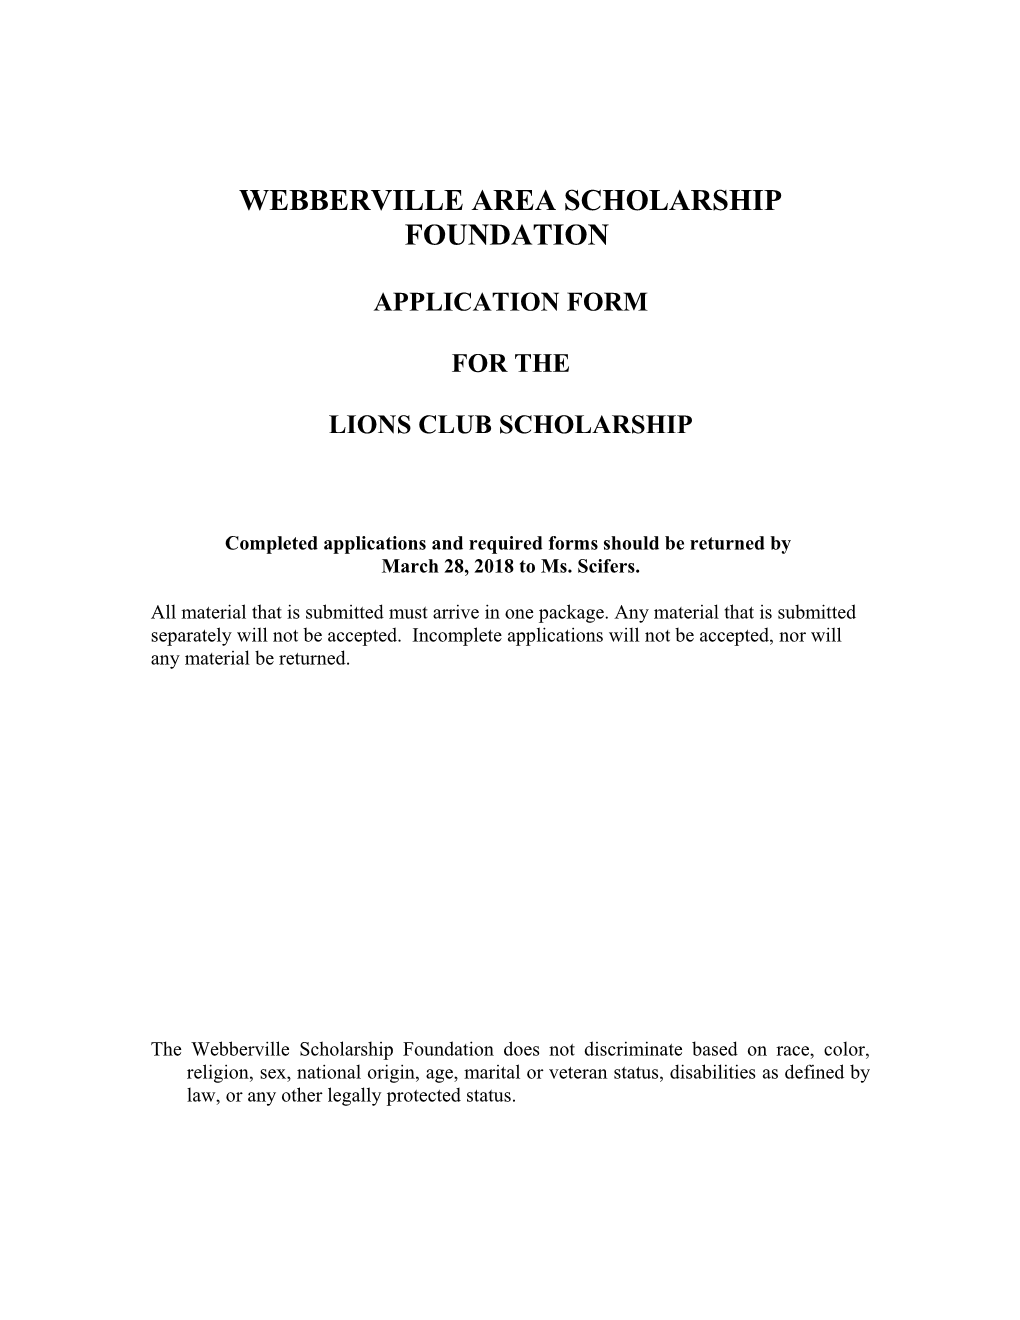 Webberville Area Scholarship Foundation